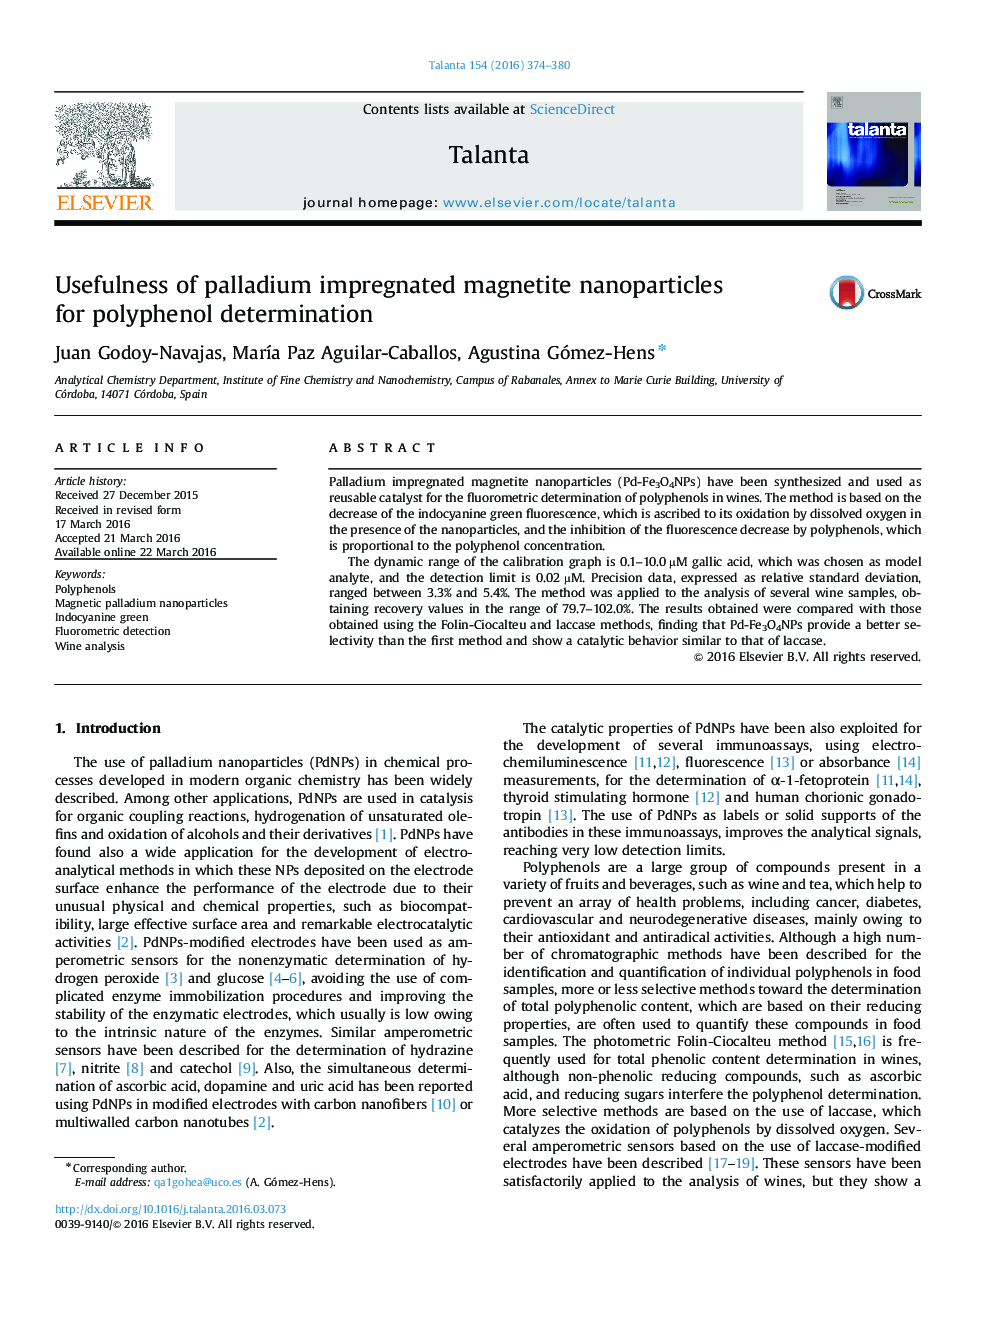 Usefulness of palladium impregnated magnetite nanoparticles for polyphenol determination